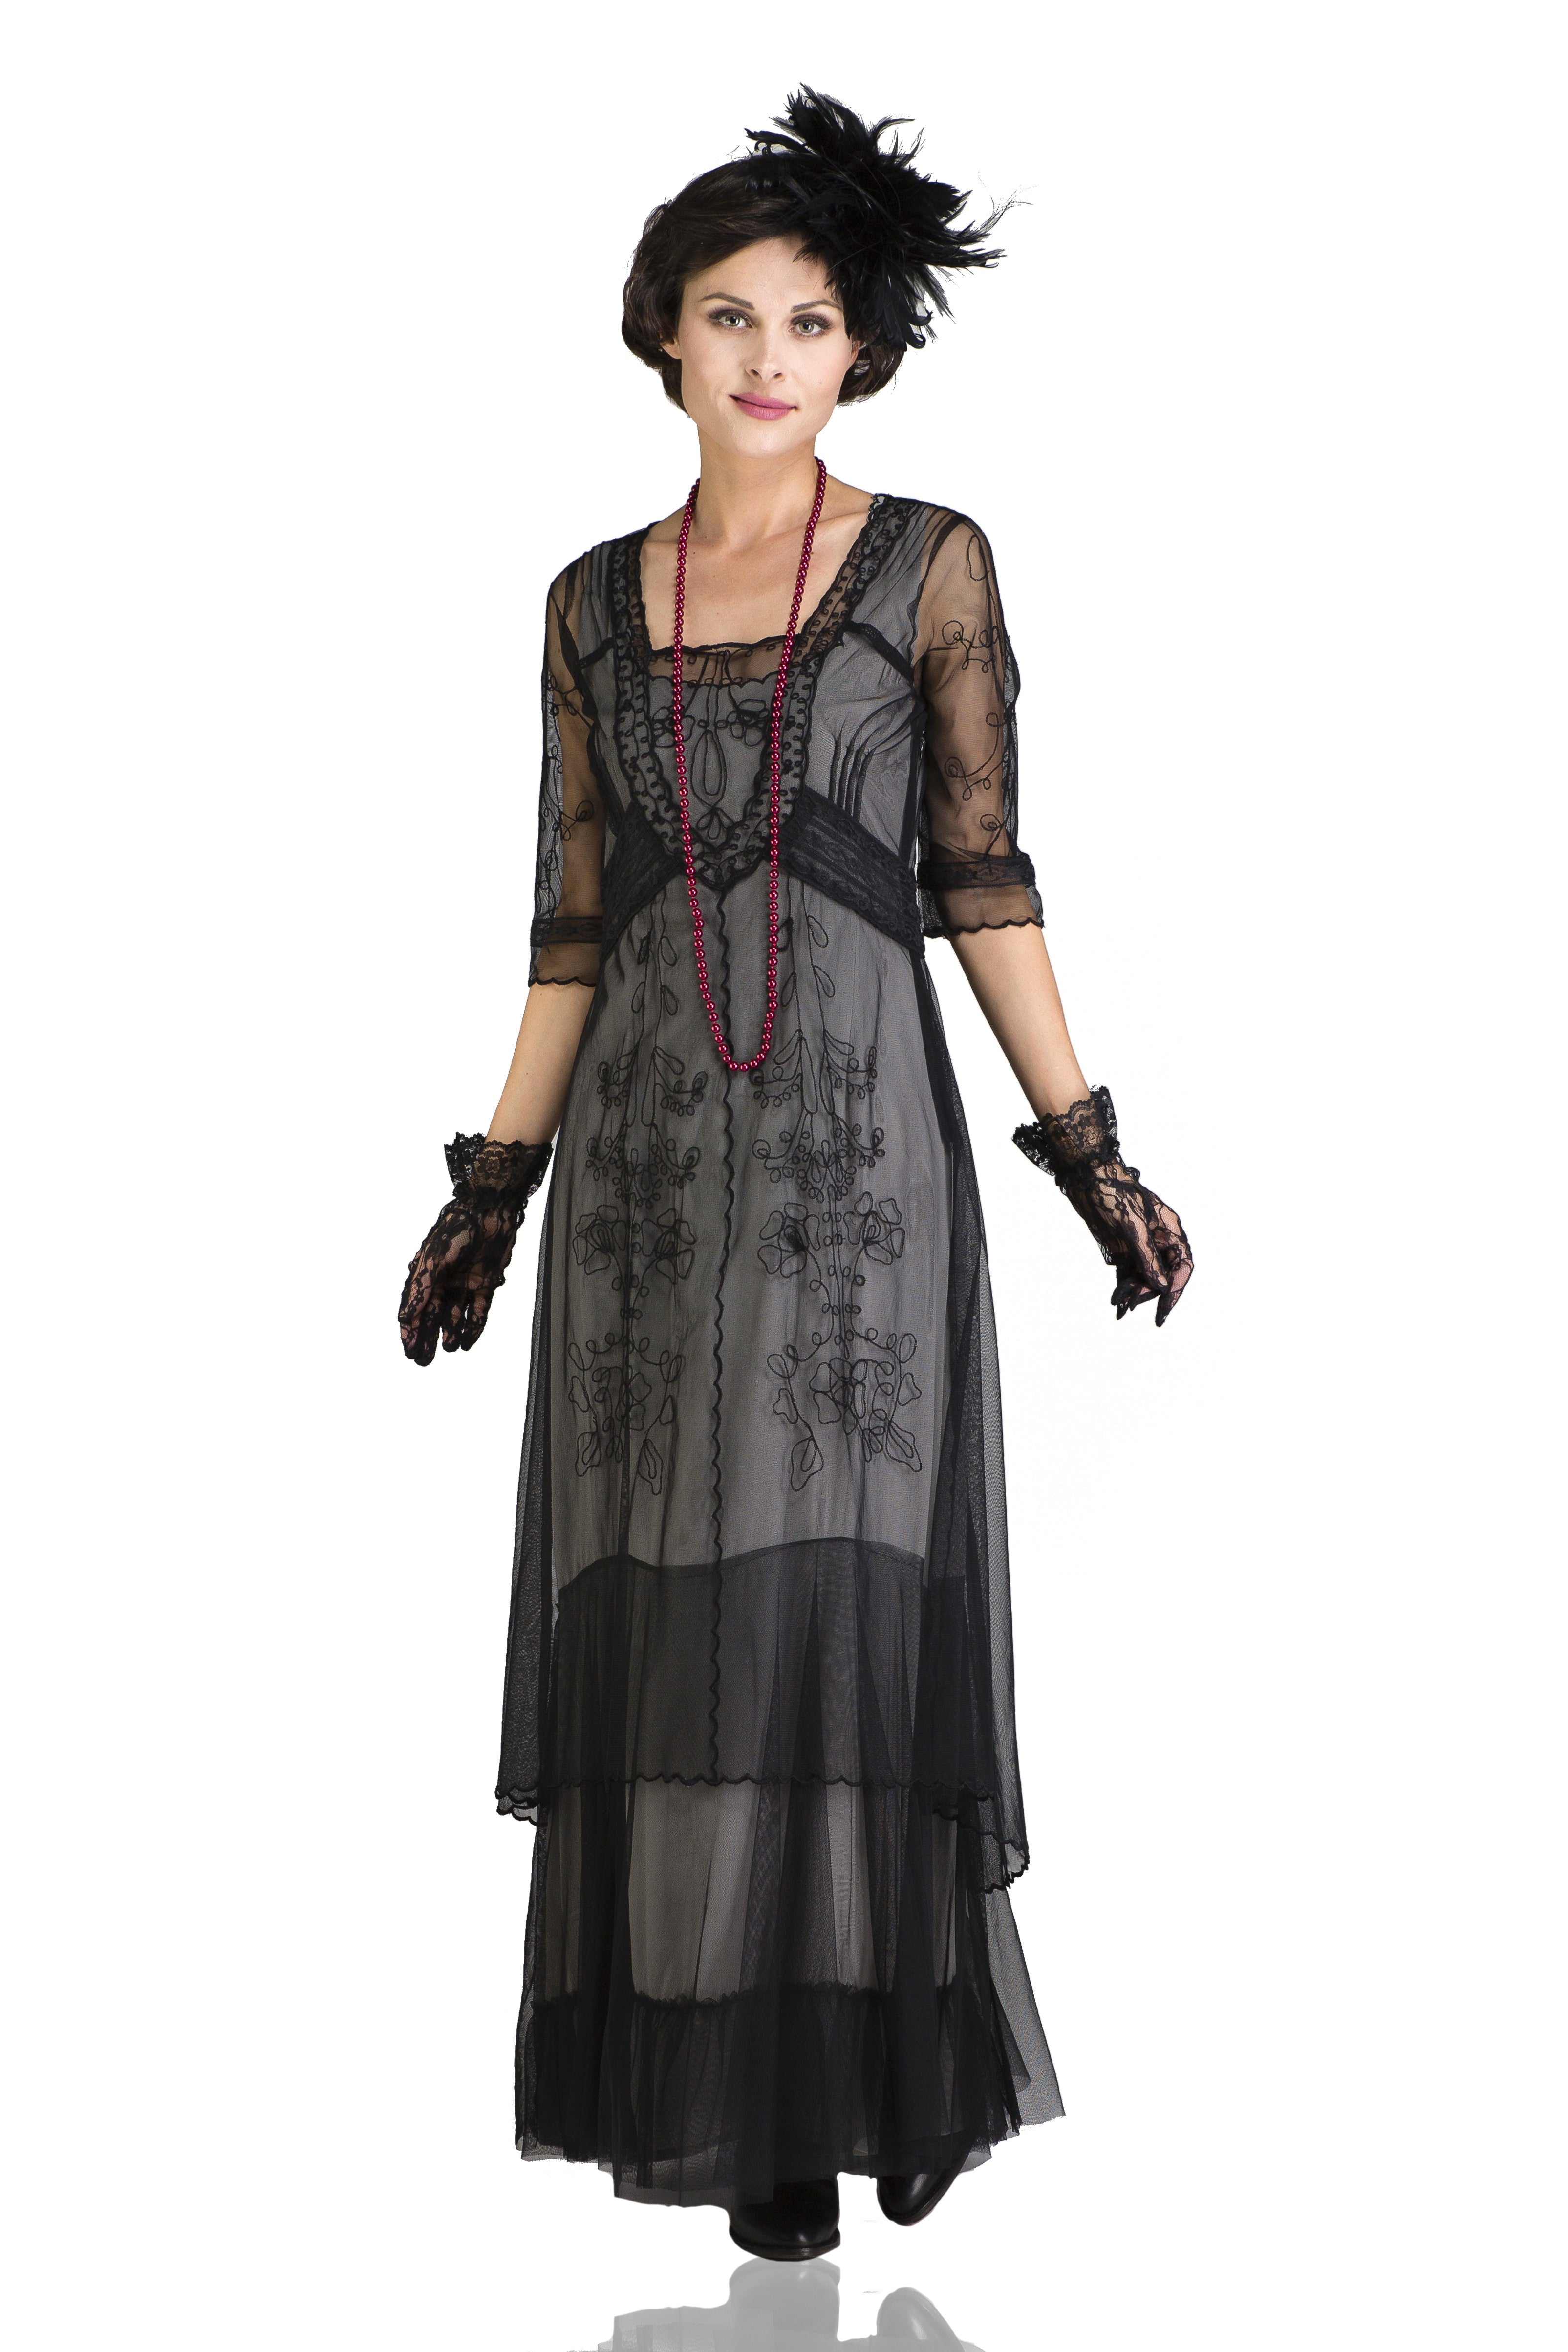 Edwardian Ladies Clothing – 1900, 1910s, Titanic Era Victoria Vintage Style Party Gown in Black by Nataya $265.00 AT vintagedancer.com